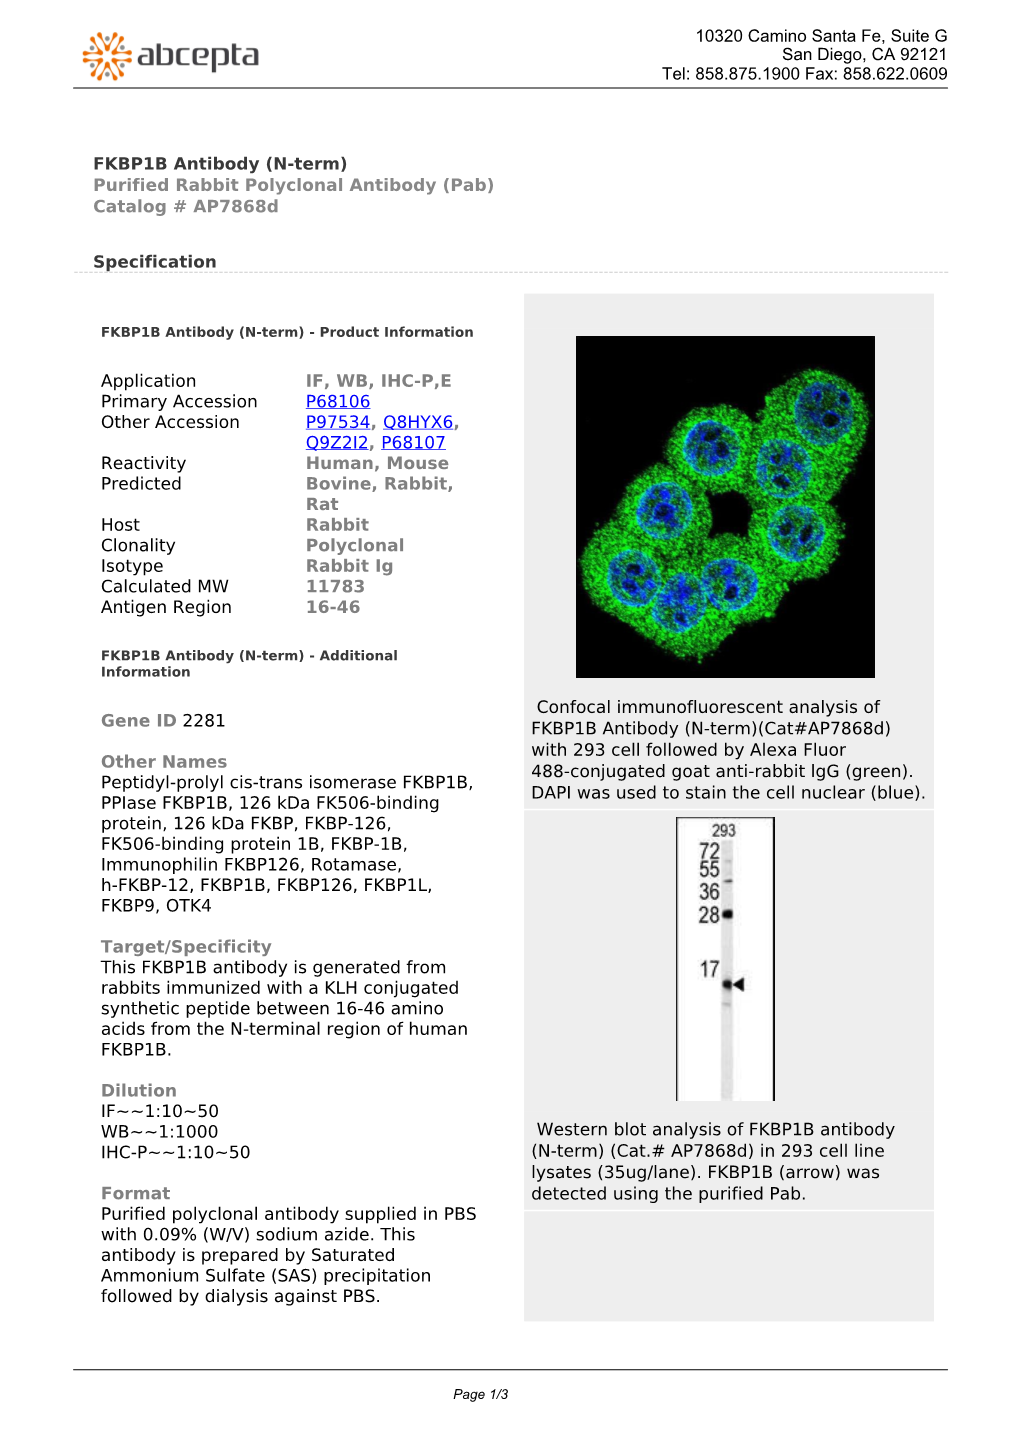 FKBP1B Antibody (N-Term) Purified Rabbit Polyclonal Antibody (Pab) Catalog # Ap7868d